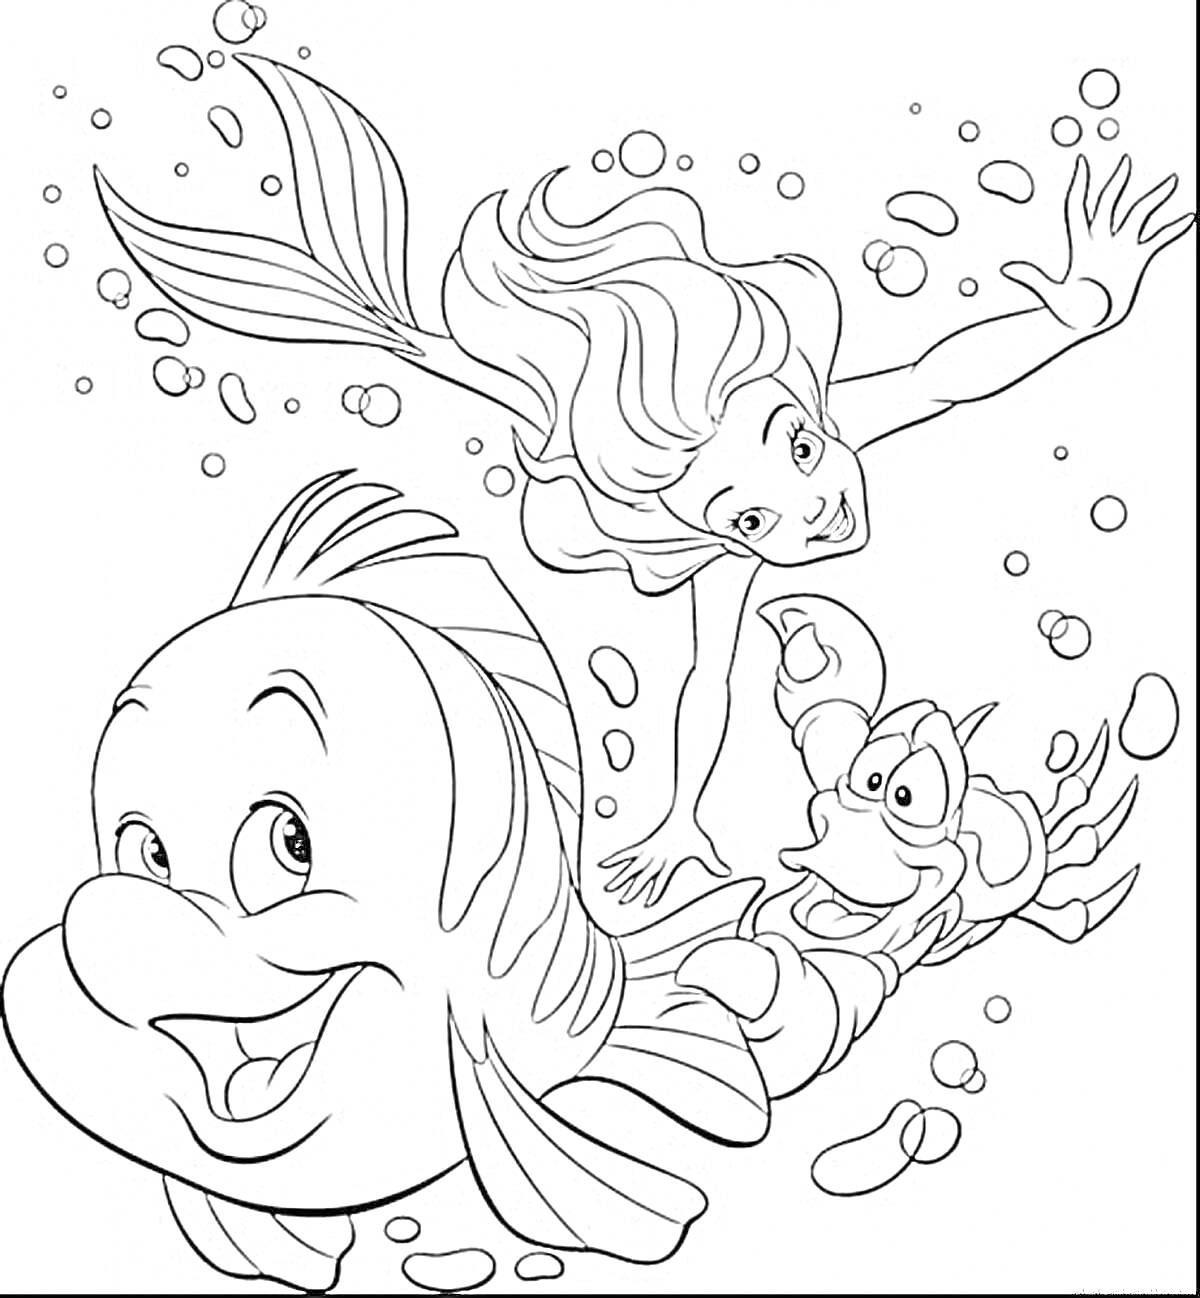 Русалочка, рыба и краб под водой, окружённые пузырьками